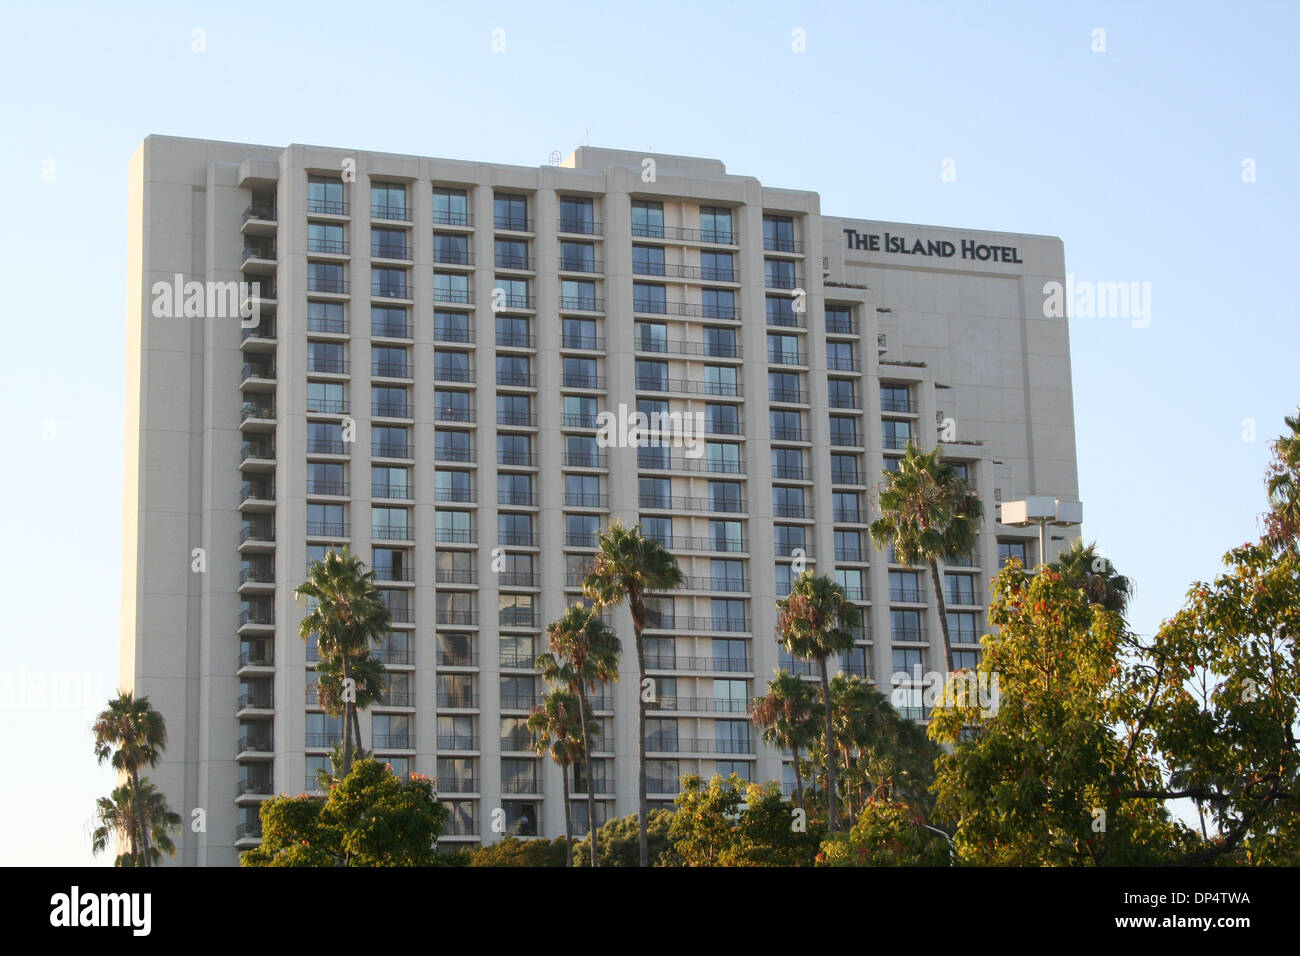 Island Hotel Newport Beach Changes Name to Fashion Island Hotel